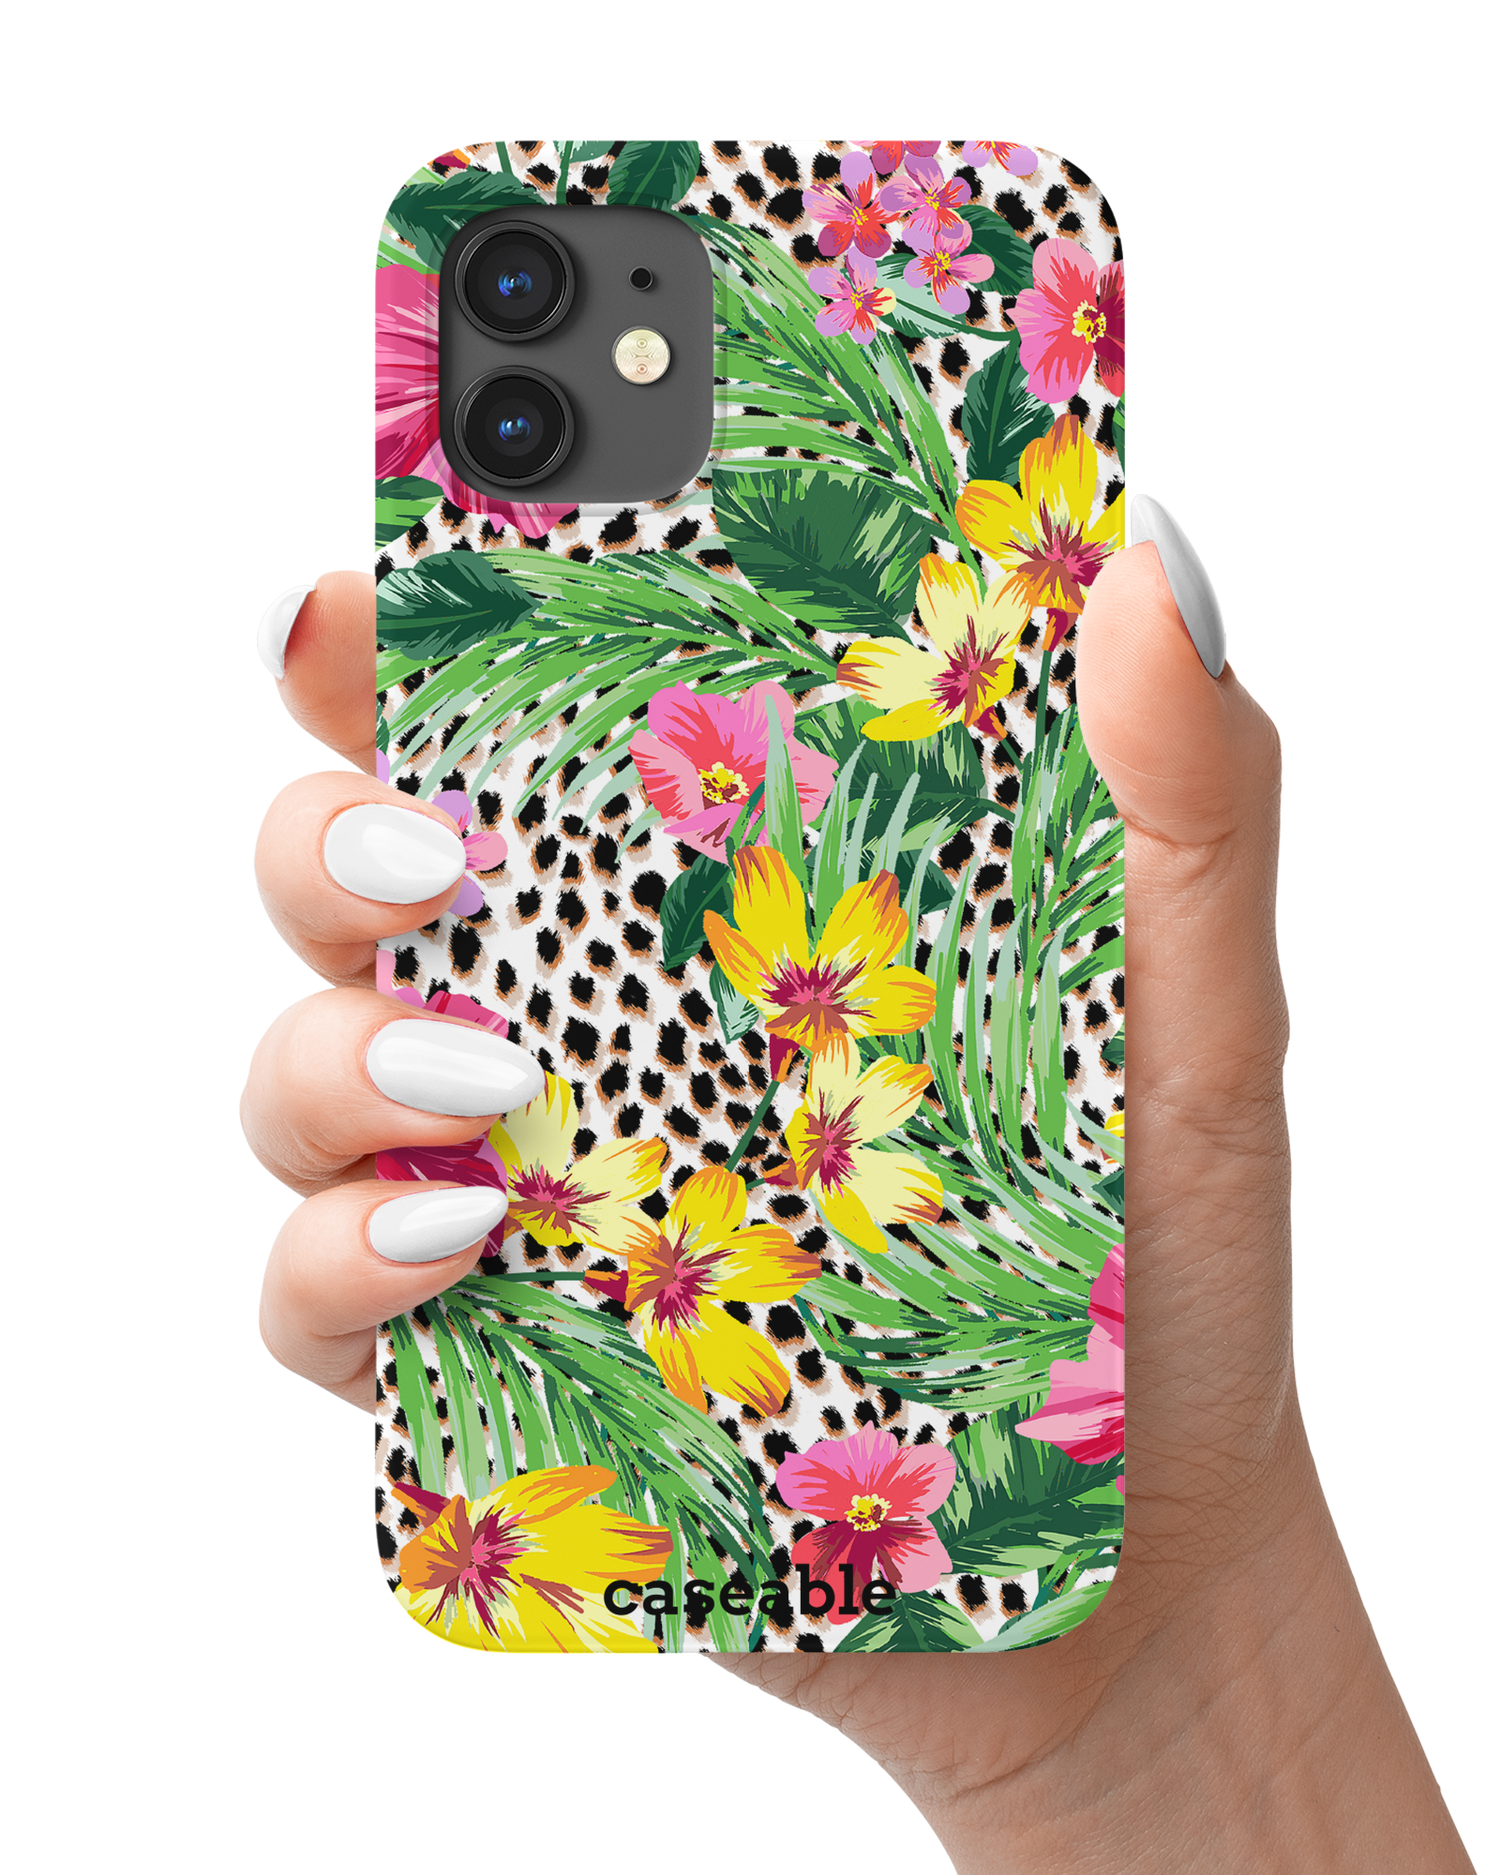 Tropical Cheetah Hardcase Handyhülle Apple iPhone 12 mini in der Hand gehalten